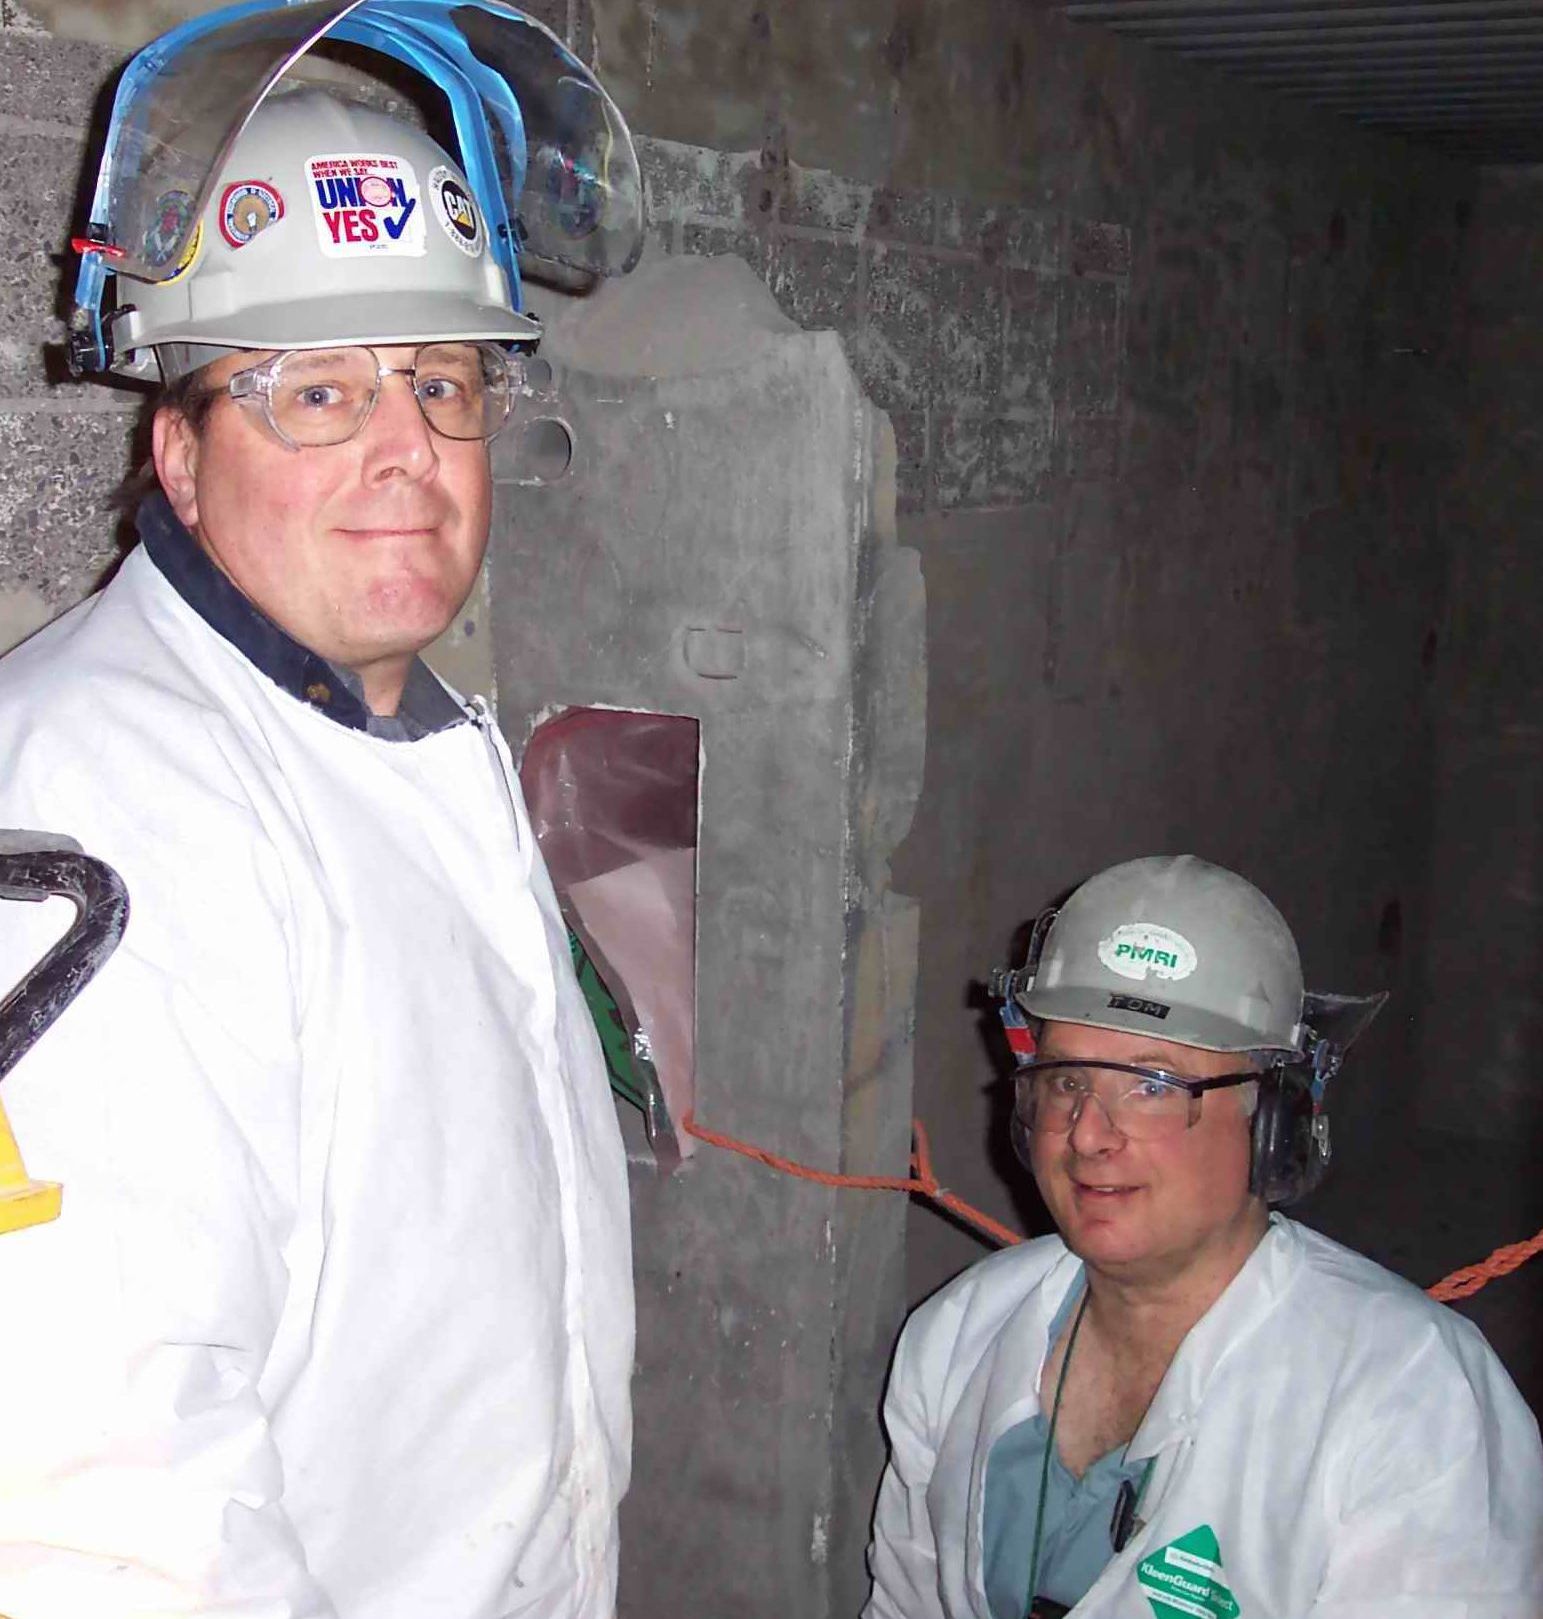 Steve and Tom
Keywords: Trojan Nuclear Power Plant Rainier Ore (decommissioned)